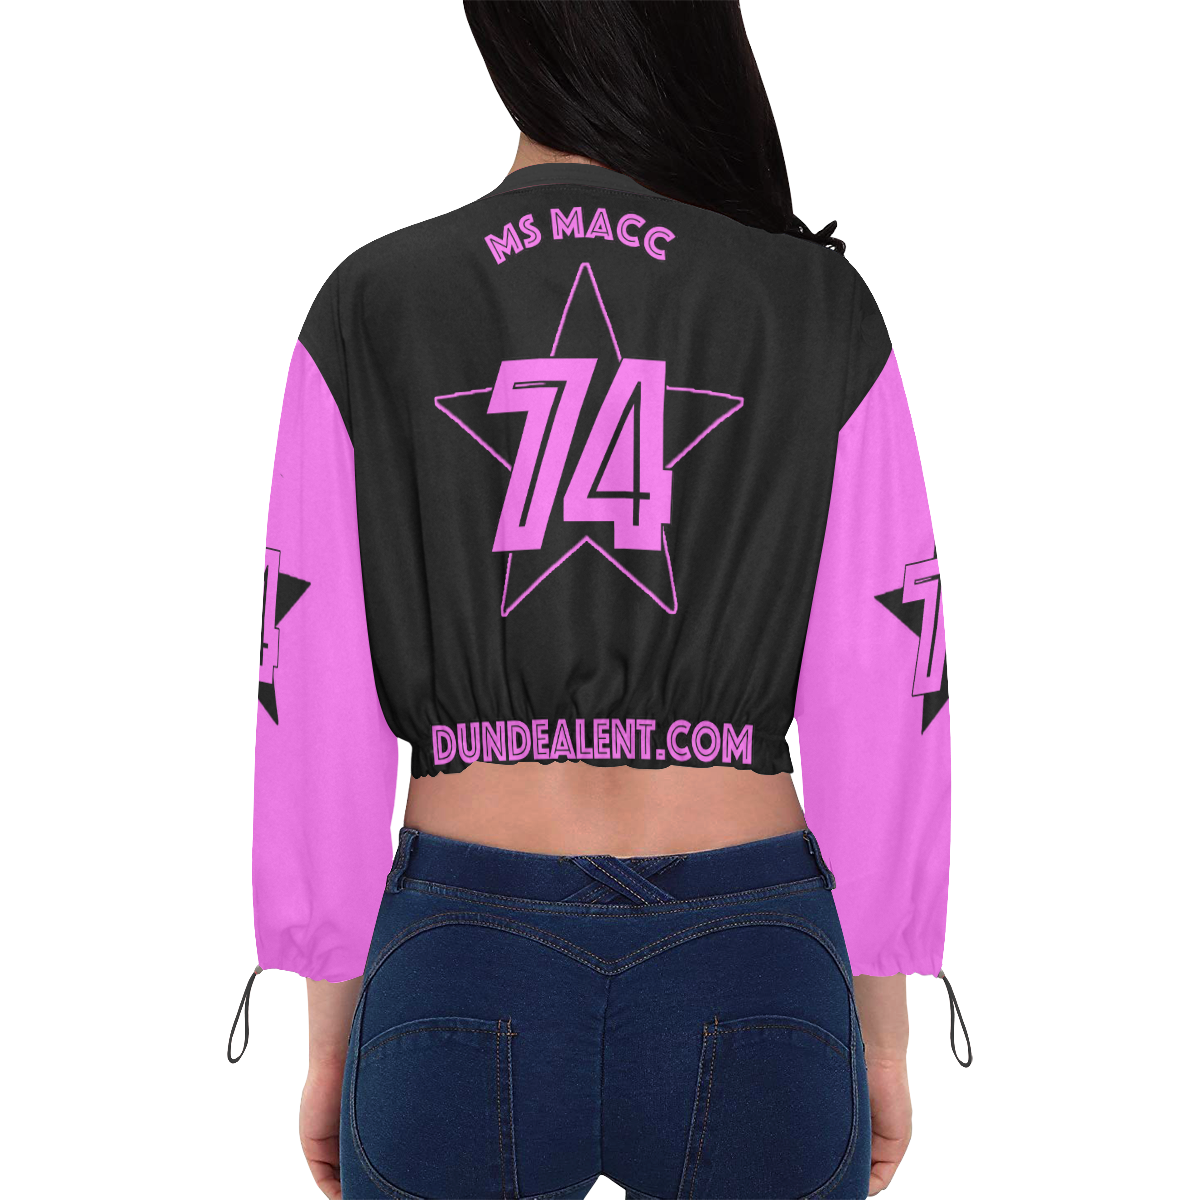 Ms Macc 5 star II Black/Pink Cropped Chiffon Jacket for Women (Model H30)